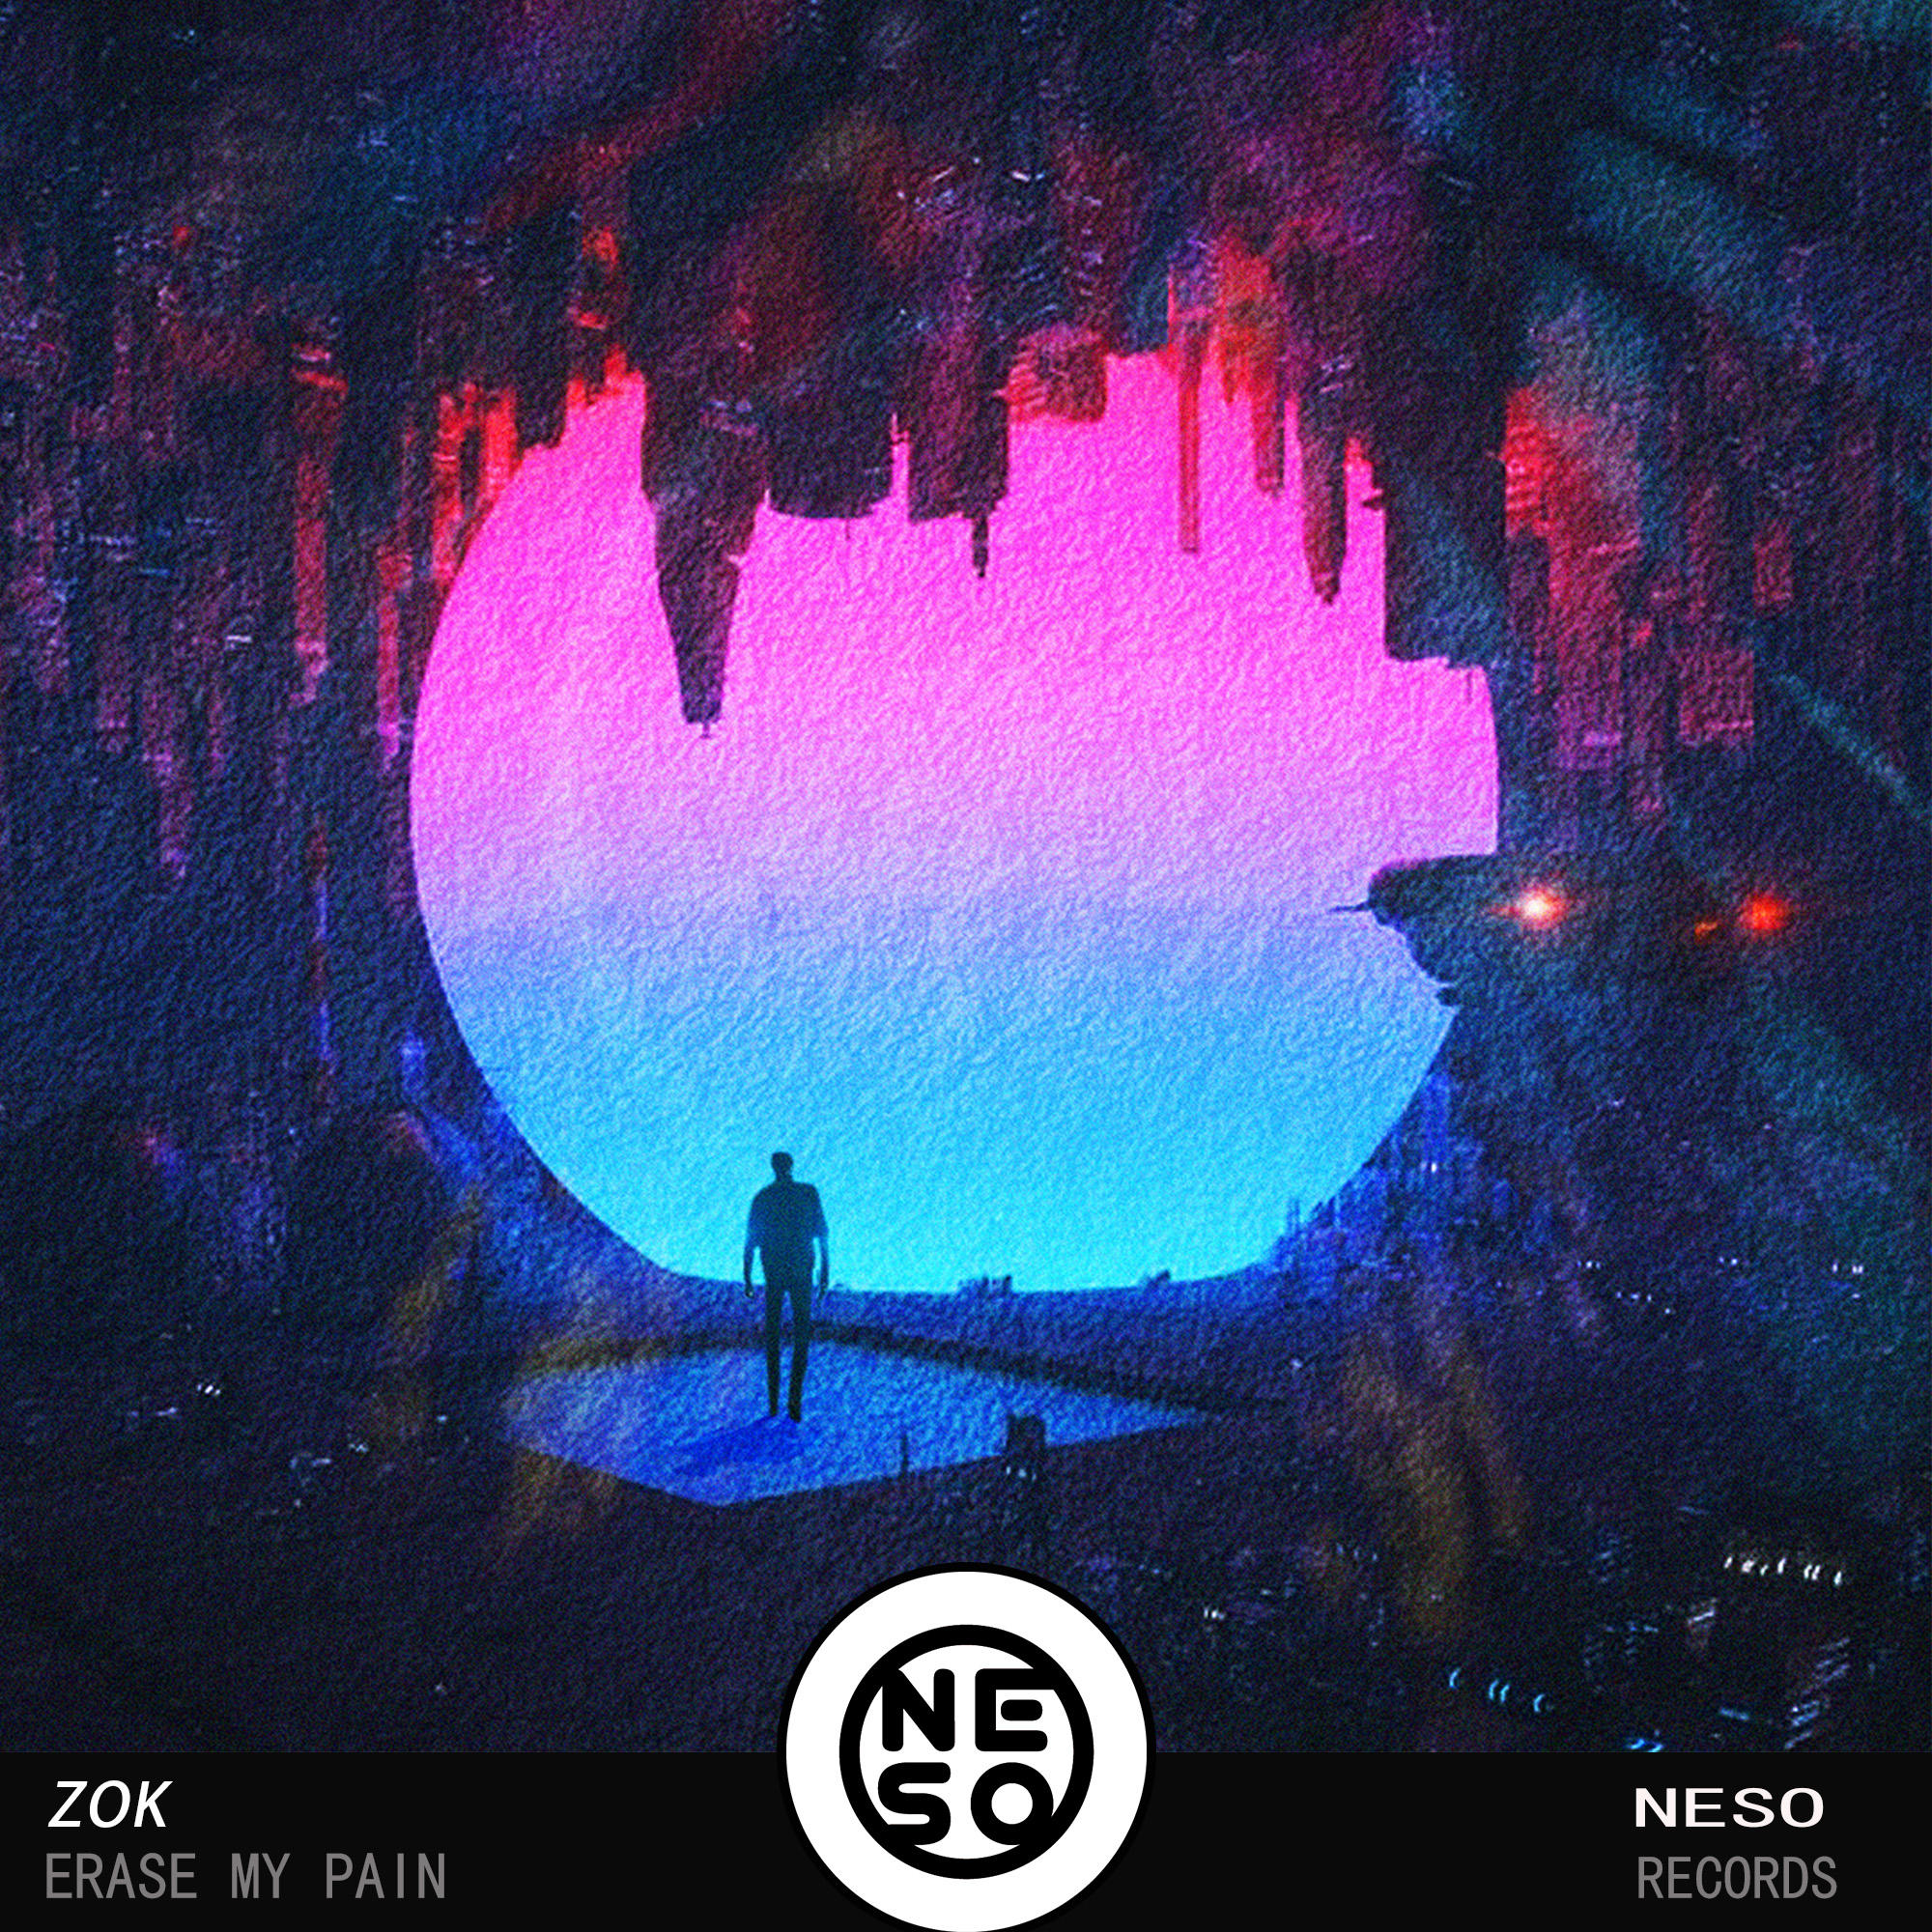  专辑：Erase My Pain，歌手：Zok / Neso Records。 